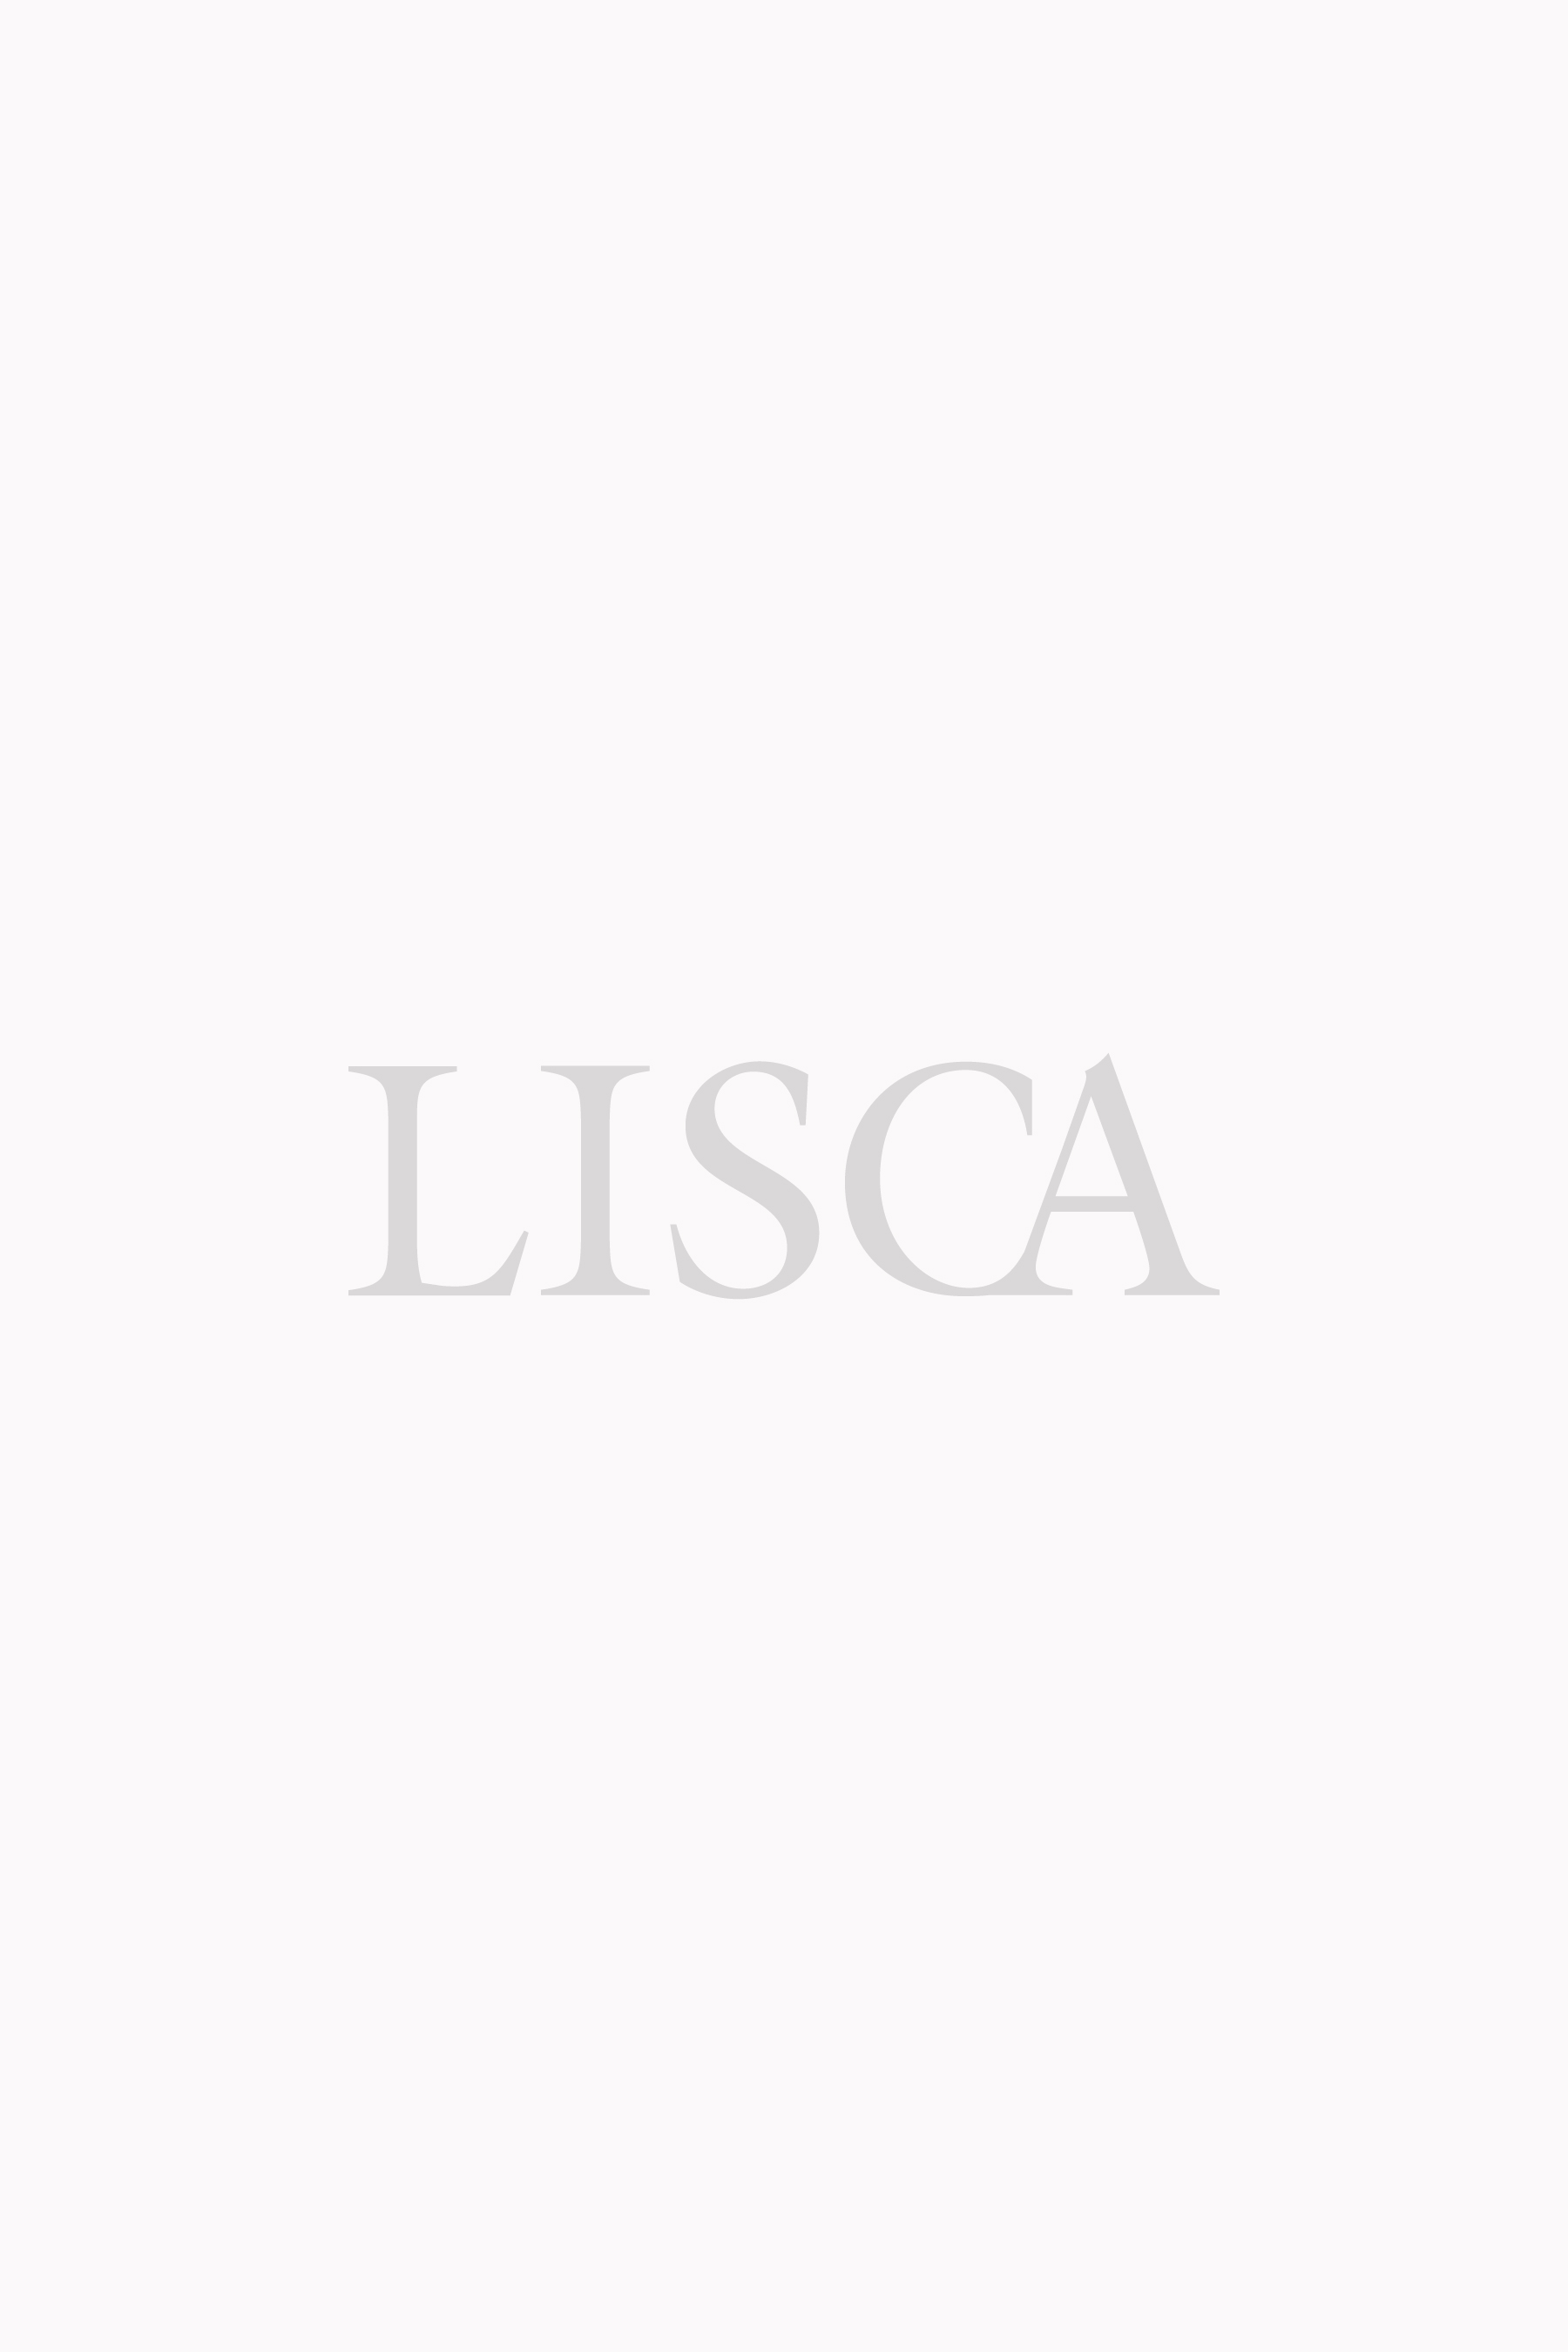 »Eternity« Brazilian Briefs - Lisca e-shop